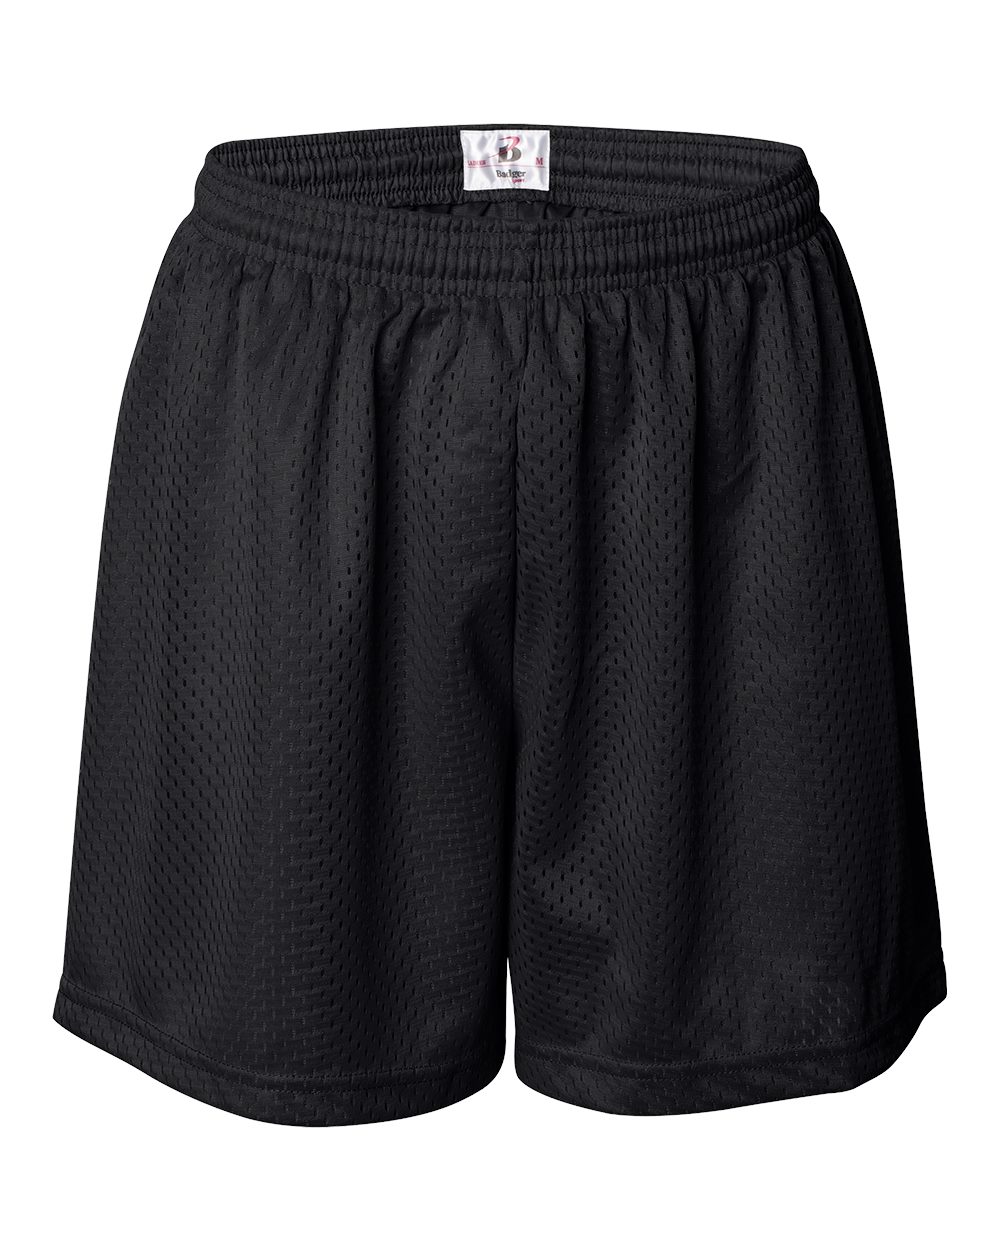 Badger 7" Inseam Pro Mesh Gym Shorts 7207 S-5XL Athletic Basketball 